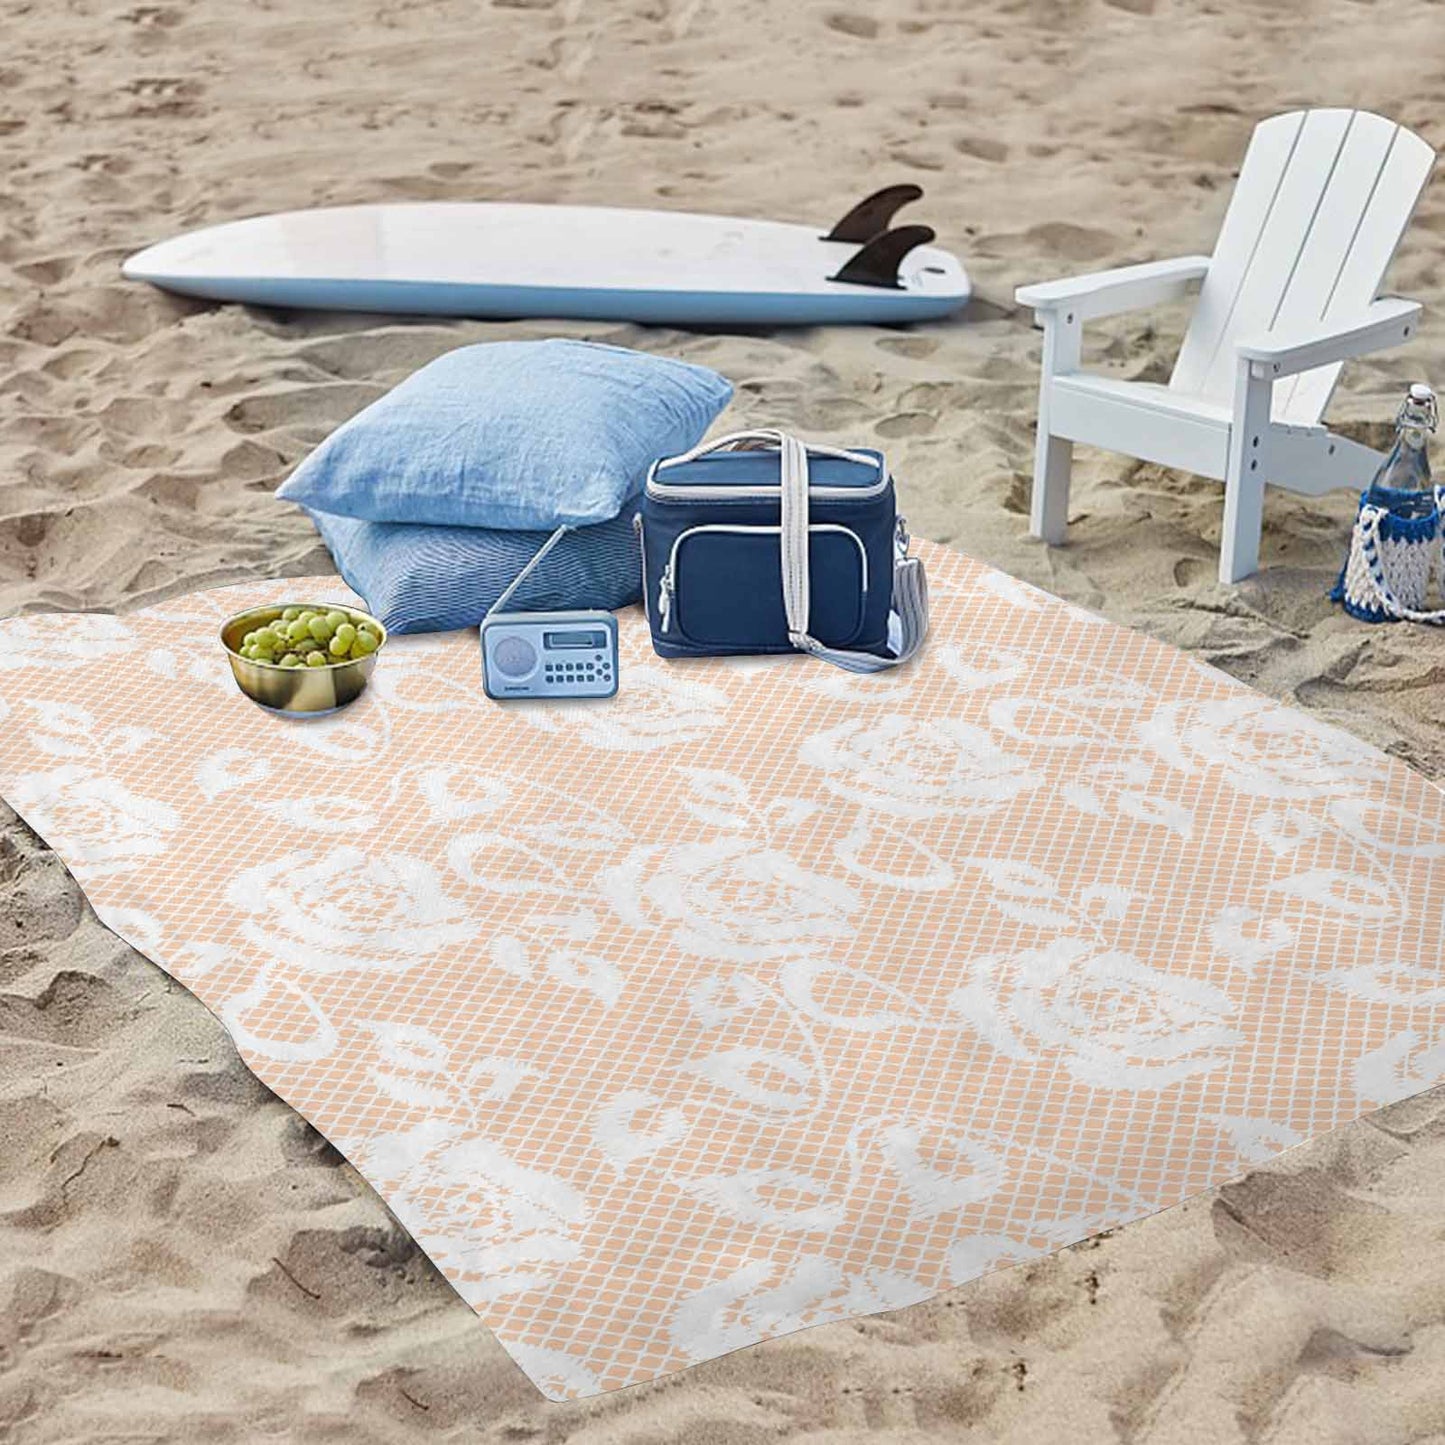 Victorian lace print waterproof picnic mat, 69 x 55in, design 16